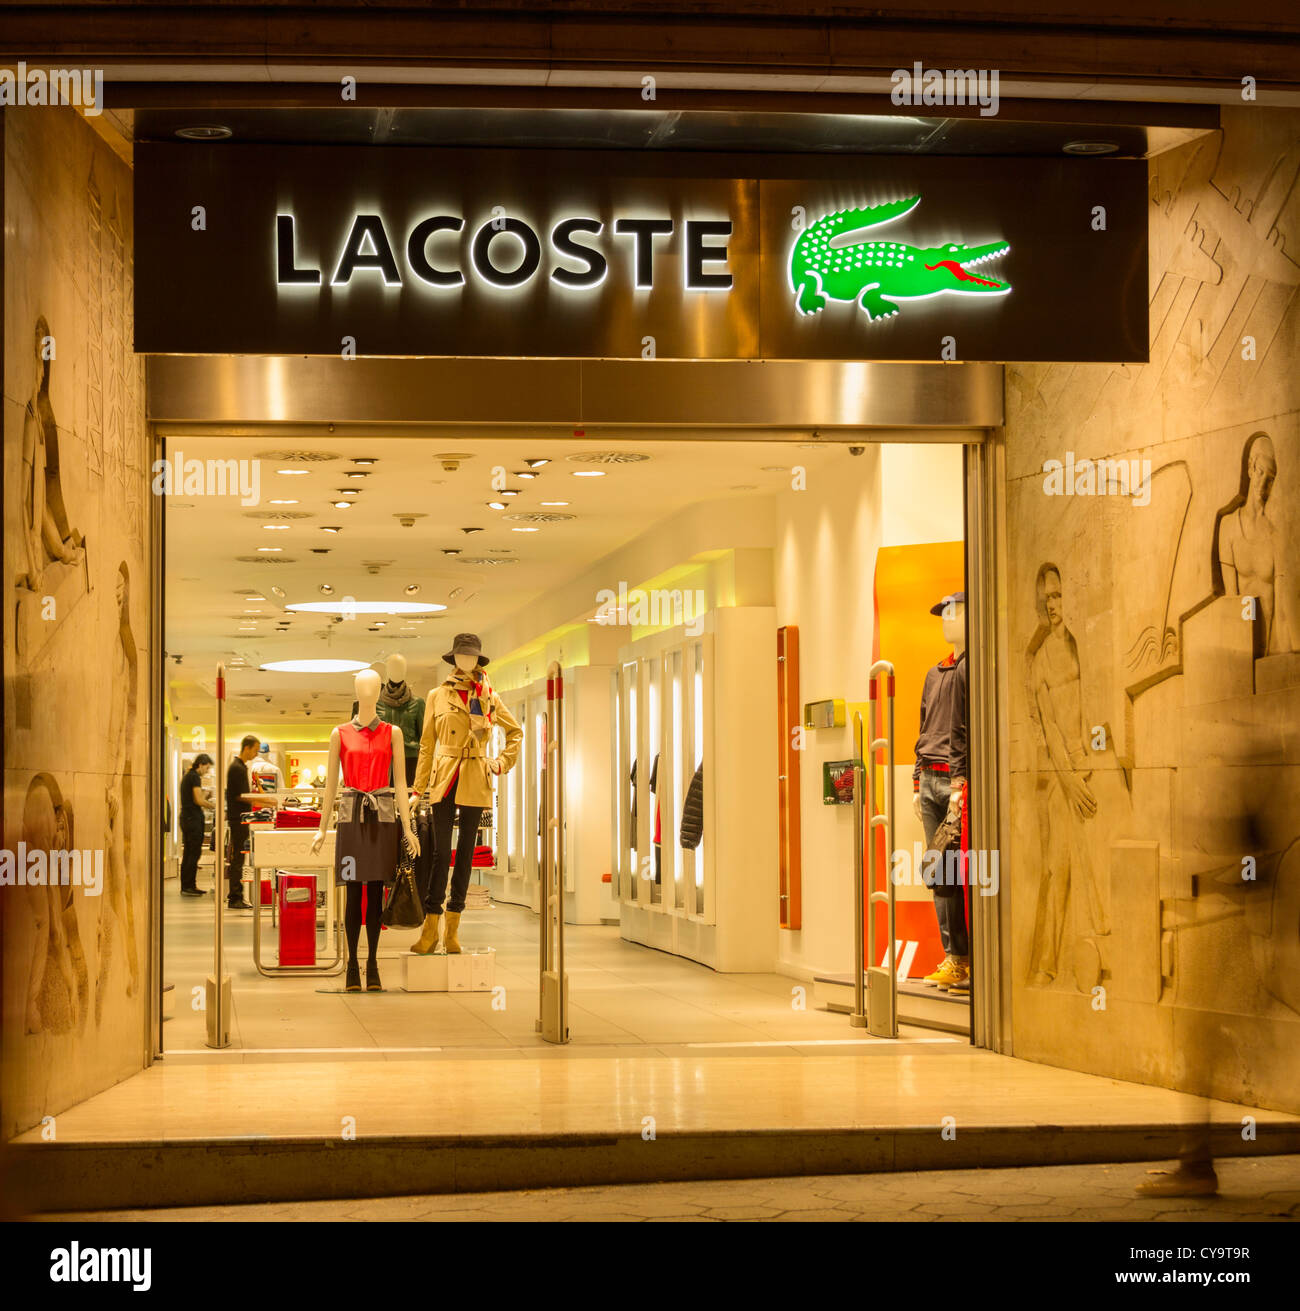 Lacoste store in Barcelona, Spain Stock Photo - Alamy